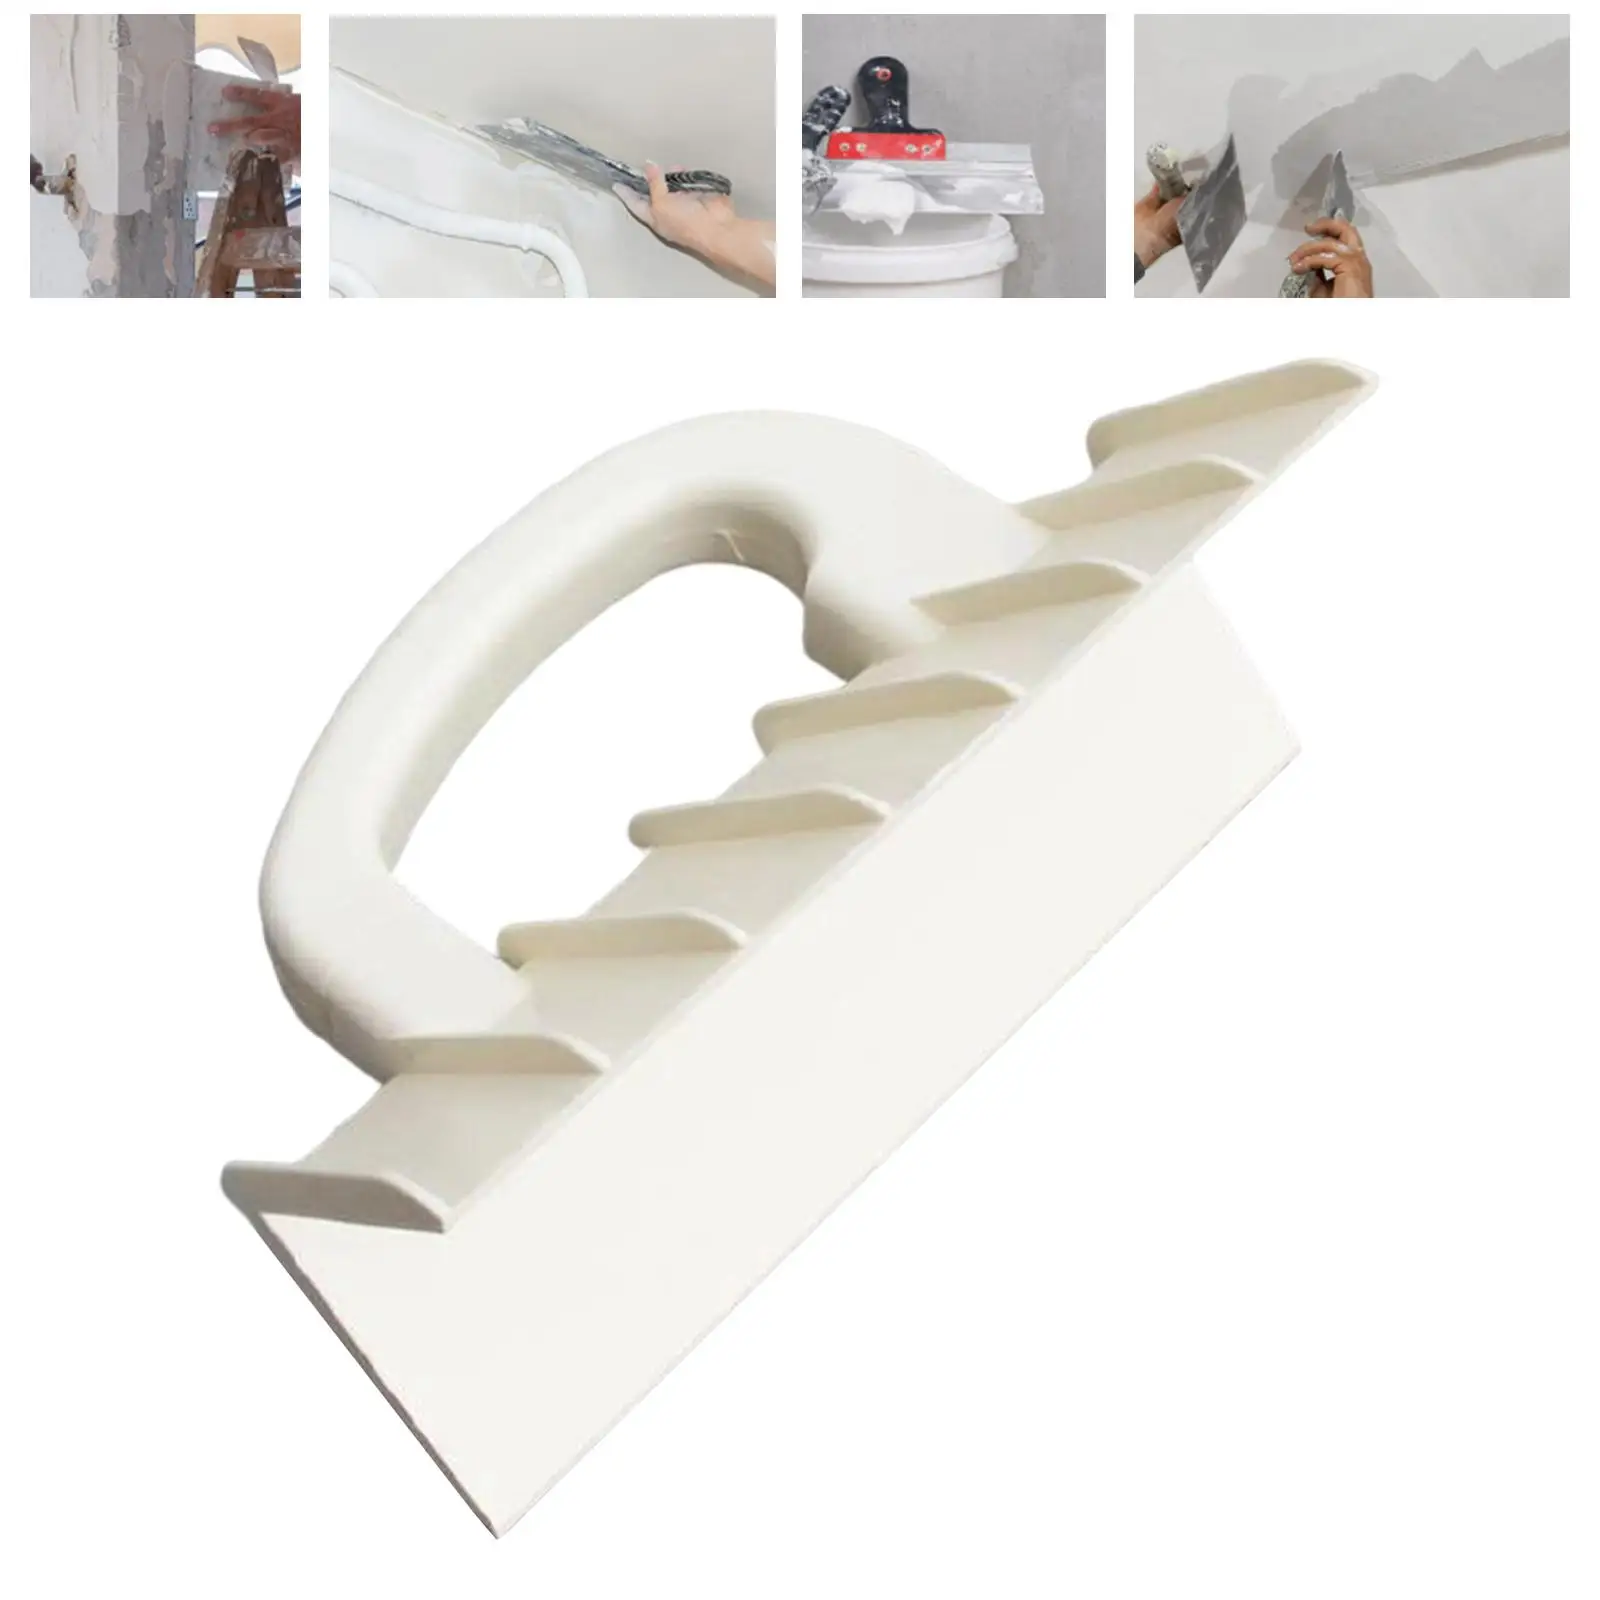 Corner Drywall Tool Hand Tool for Caulk Removal Repairing Dents Cracks Holes